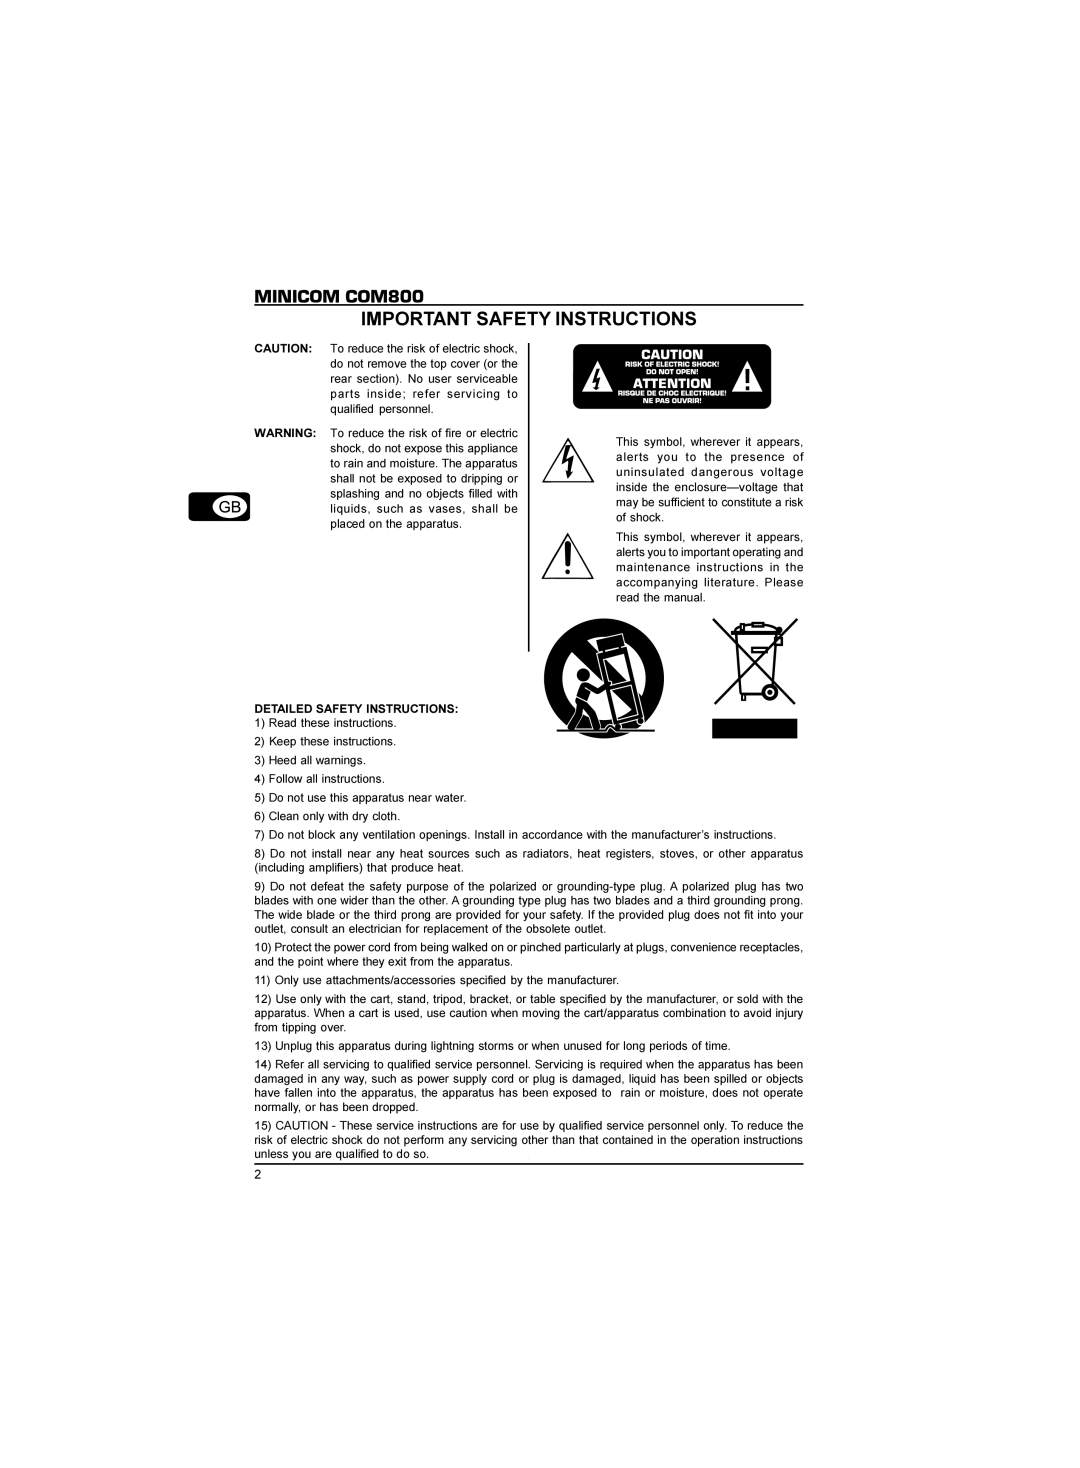 Behringer manual MINICOM COM800, Important Safety Instructions 